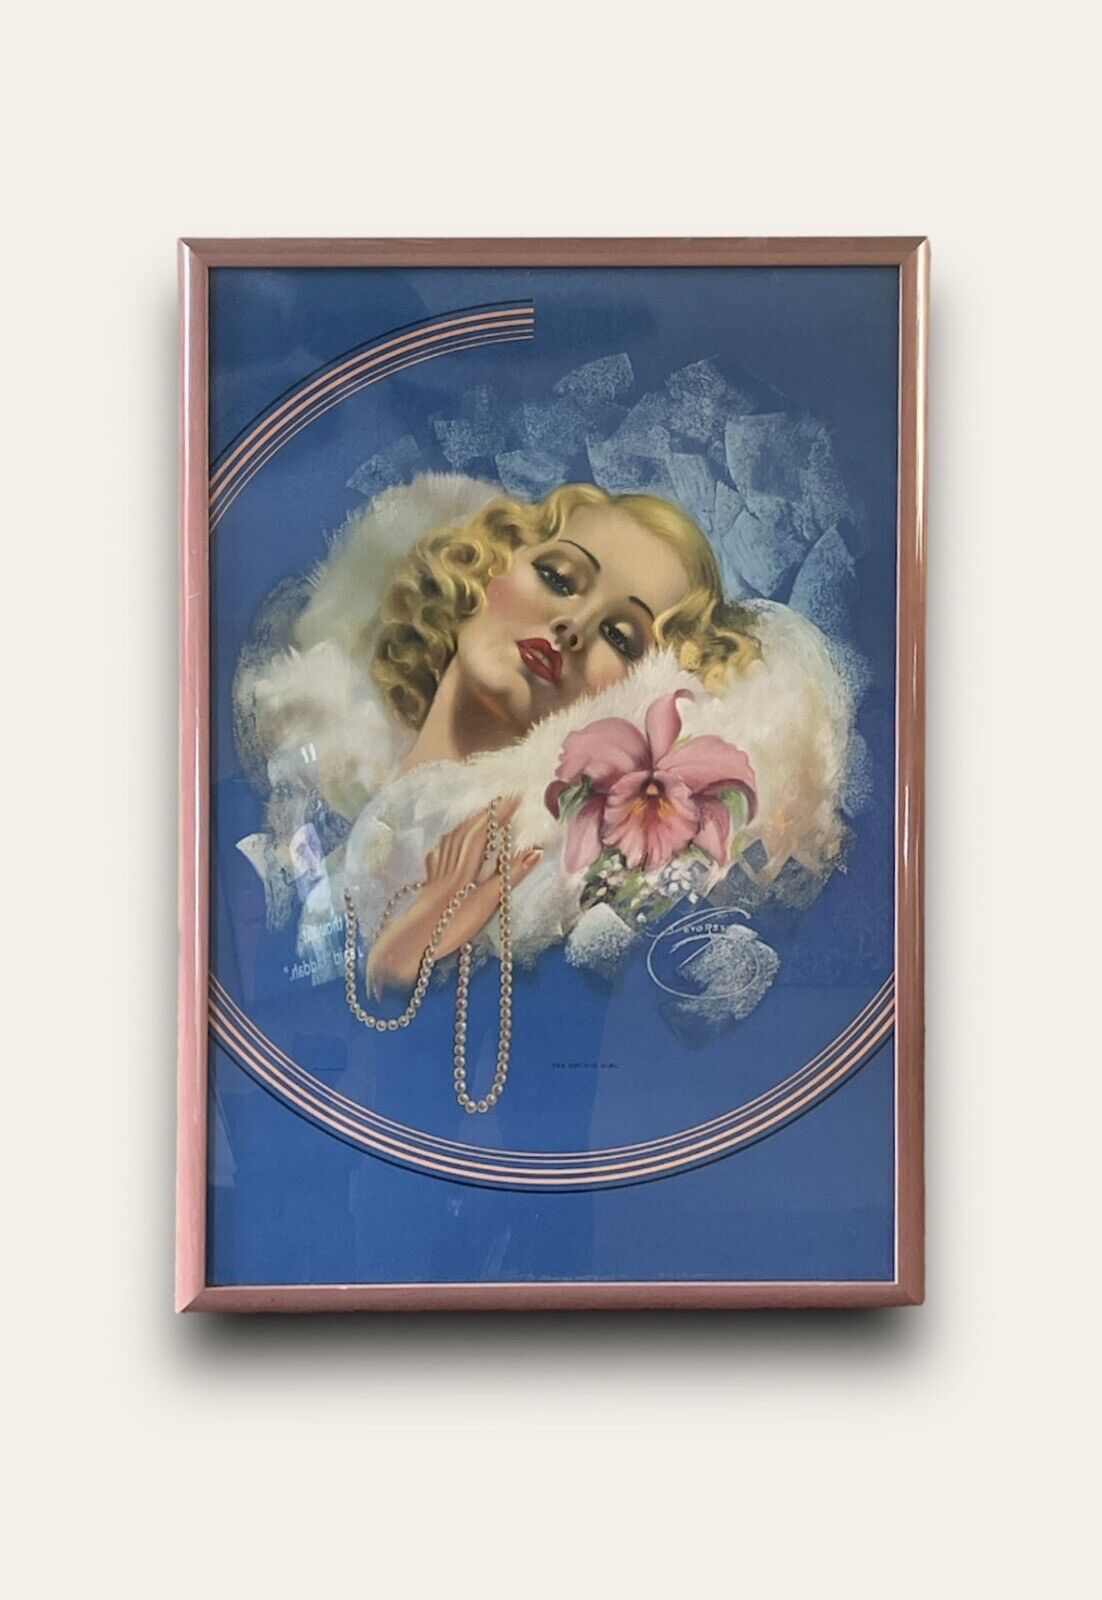 THE ORCHID GIRL - Billy Devorss (1940s) Vintage Pin-Up Framed Print/Poster